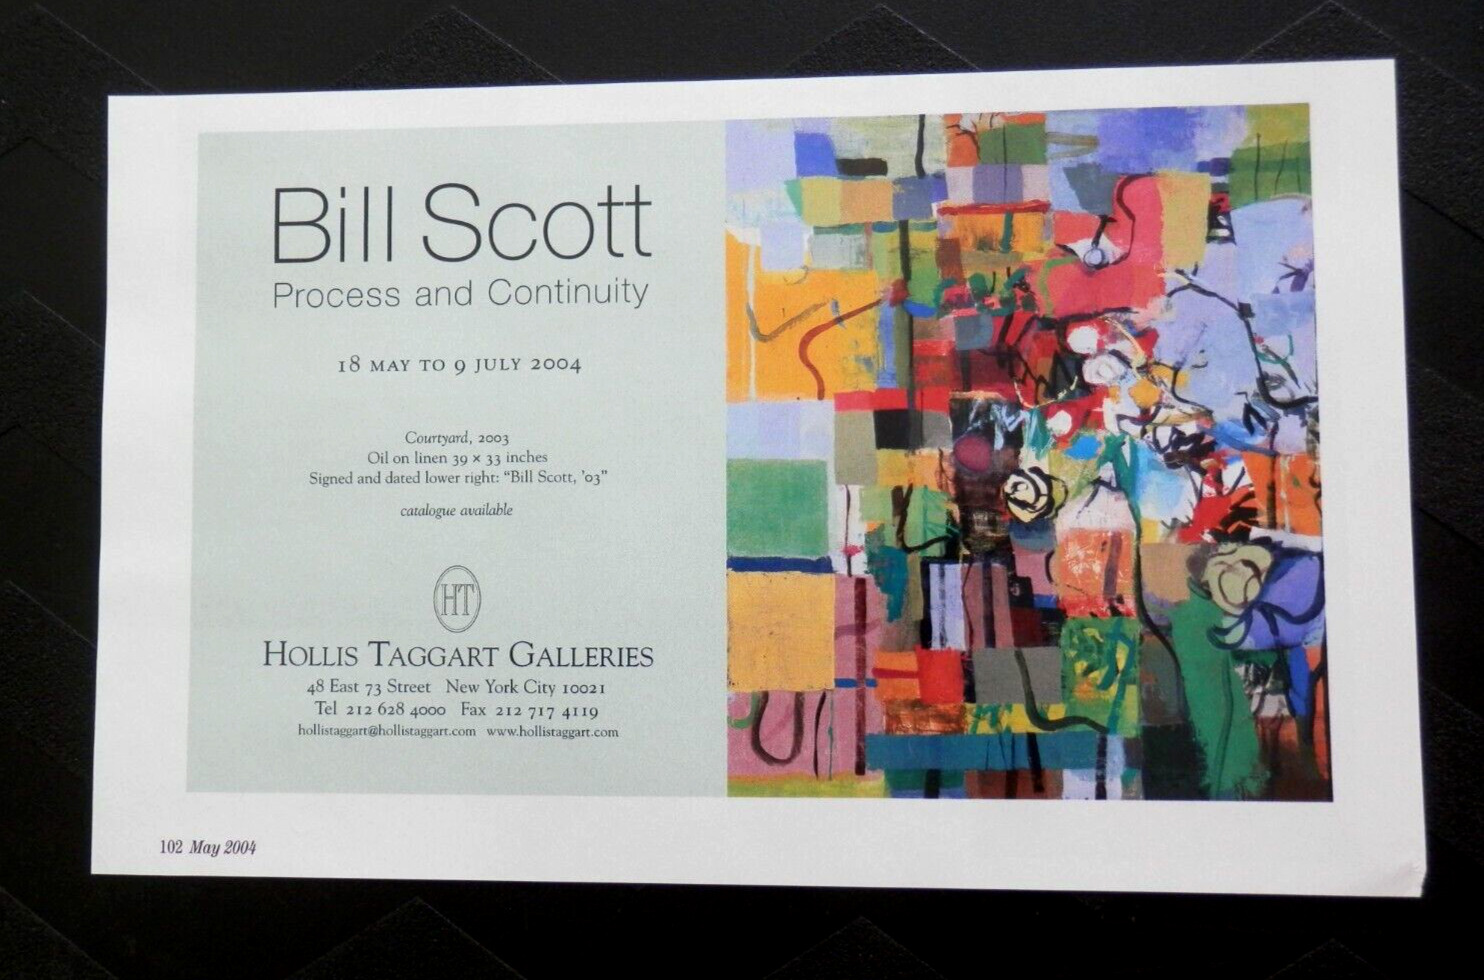 2004 PRINT AD, Bill Scott Art Exhibit, Process and Continuity, \